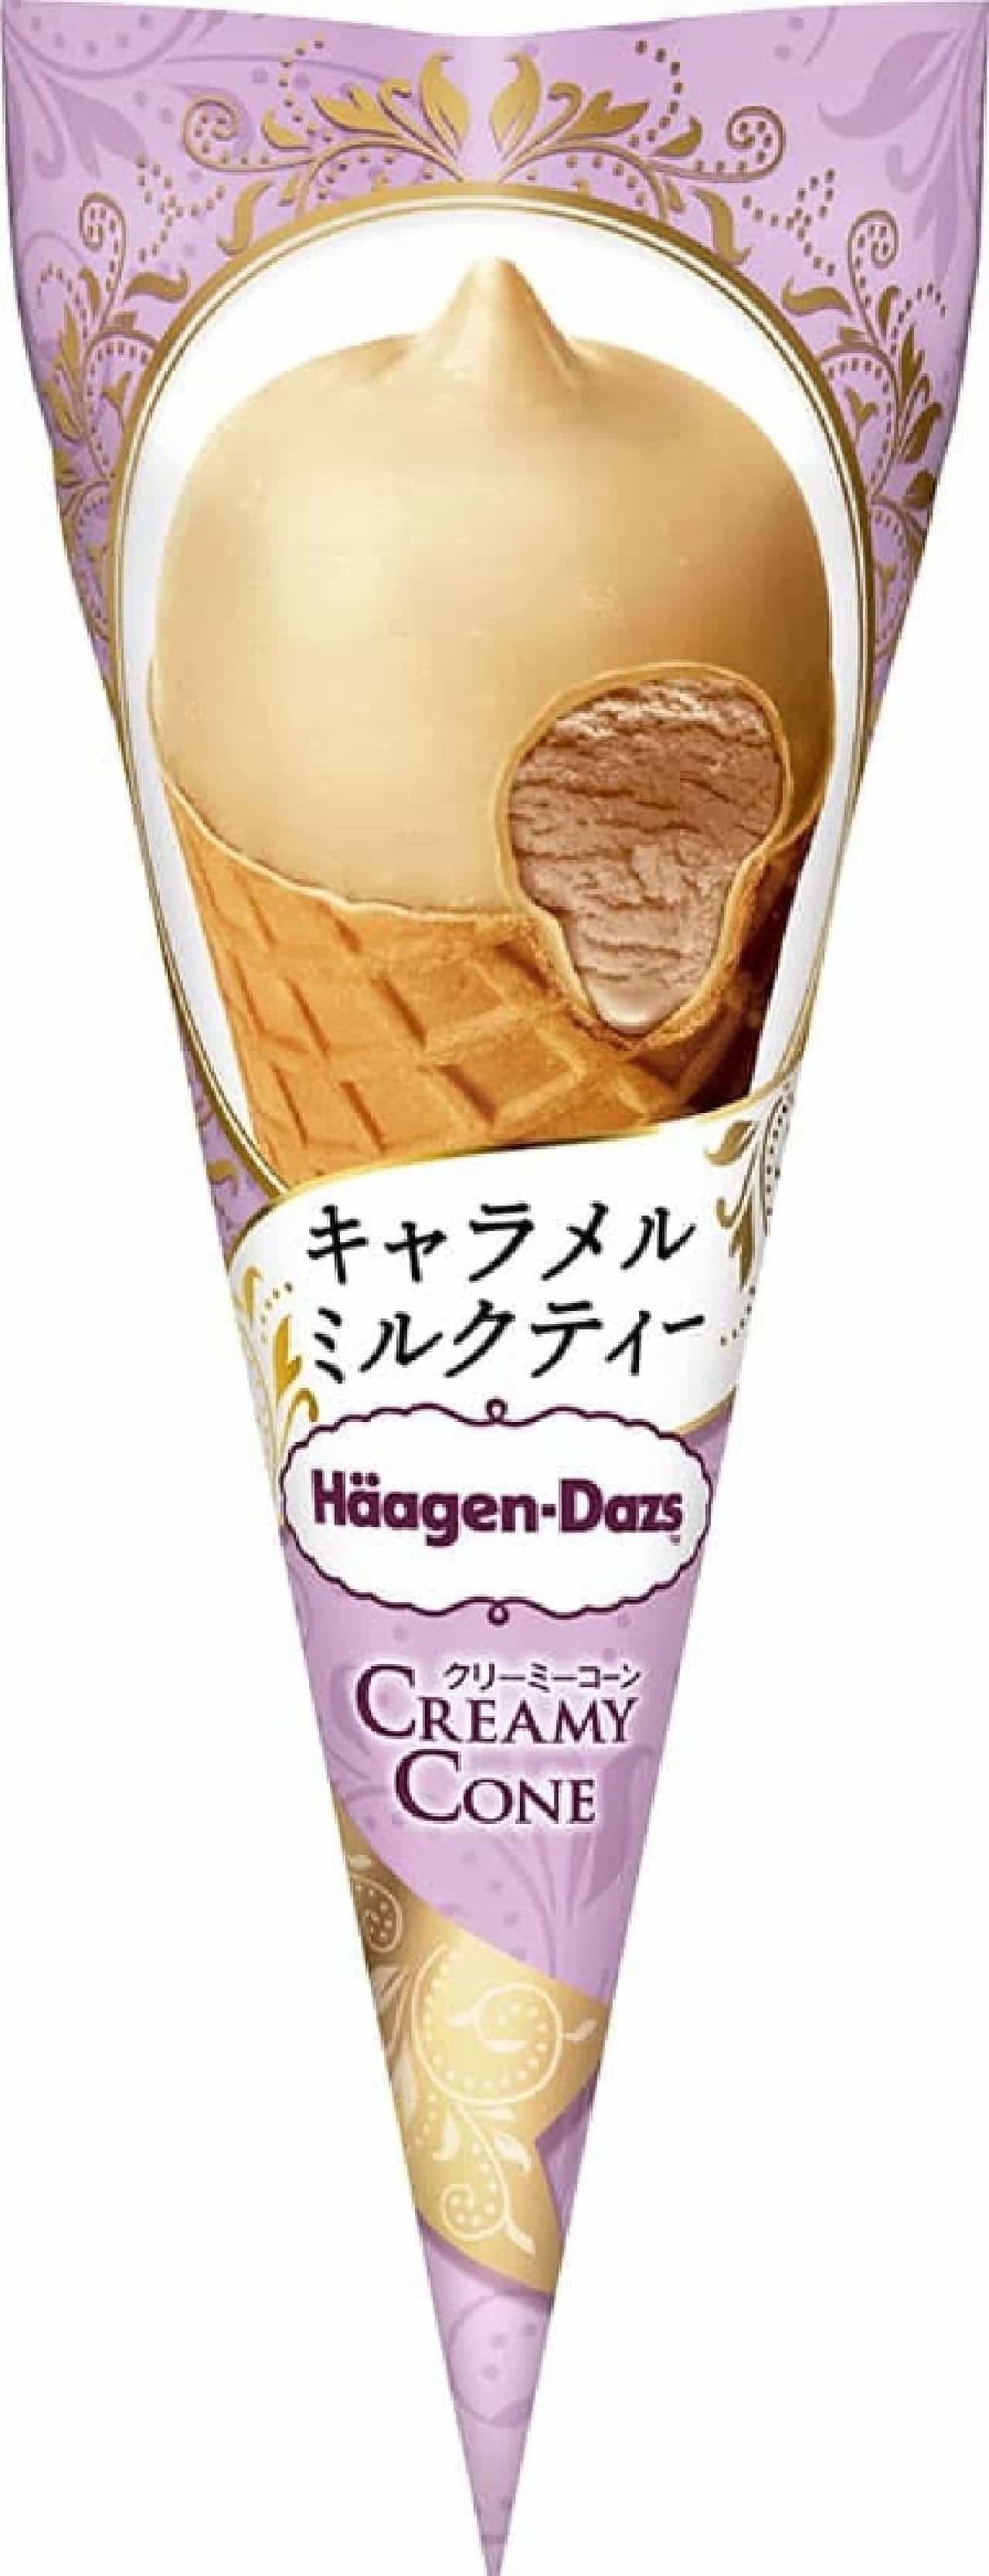 Haagen-Dazs "Creamy Cone Caramel Milk Tea